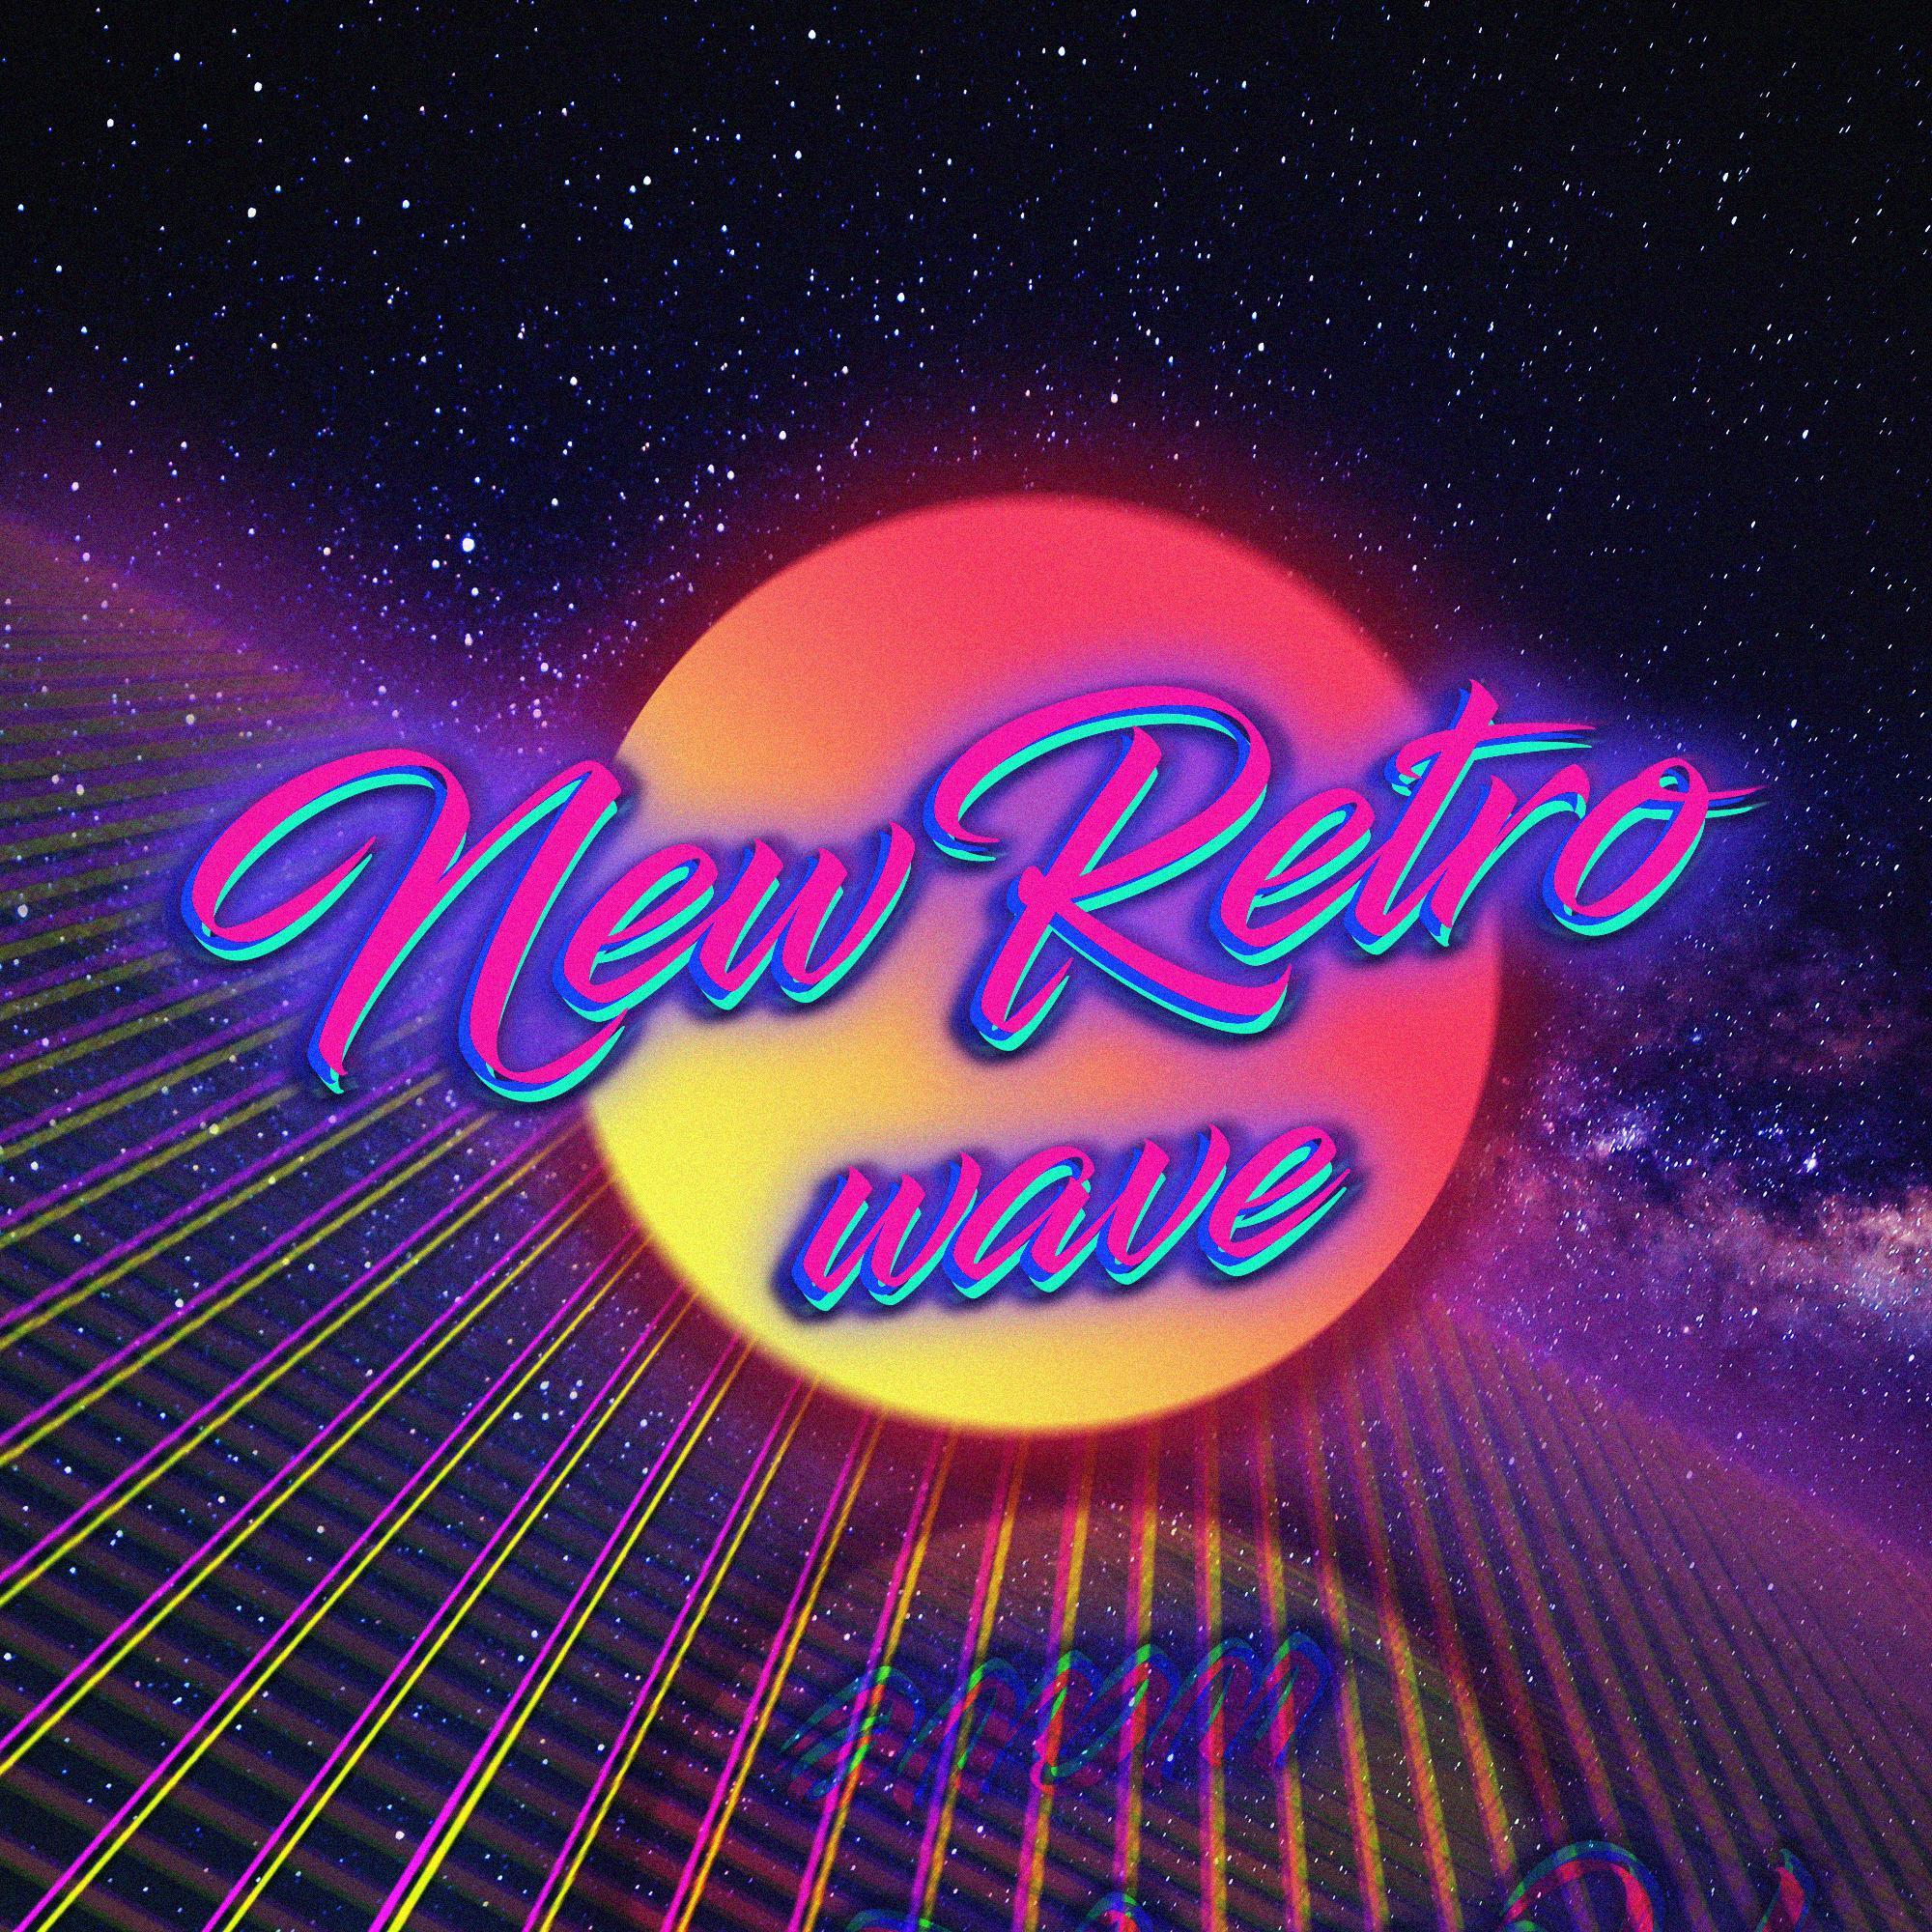 Retro style, New Retro Wave, 1980s, Digital art, Neon, Vintage